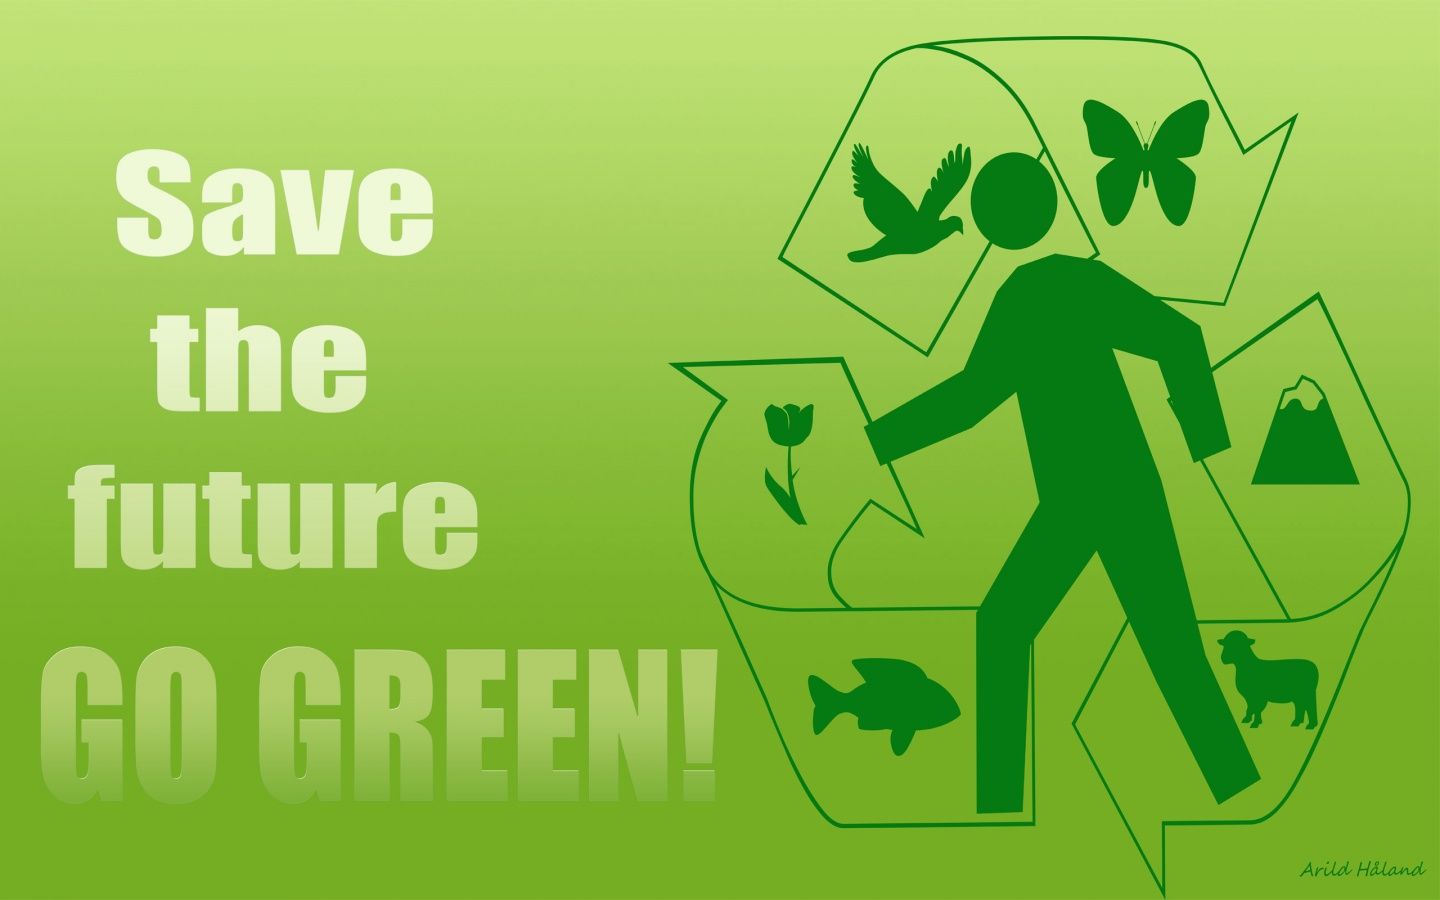 Save the future GREEN! desktop PC and Mac wallpaper